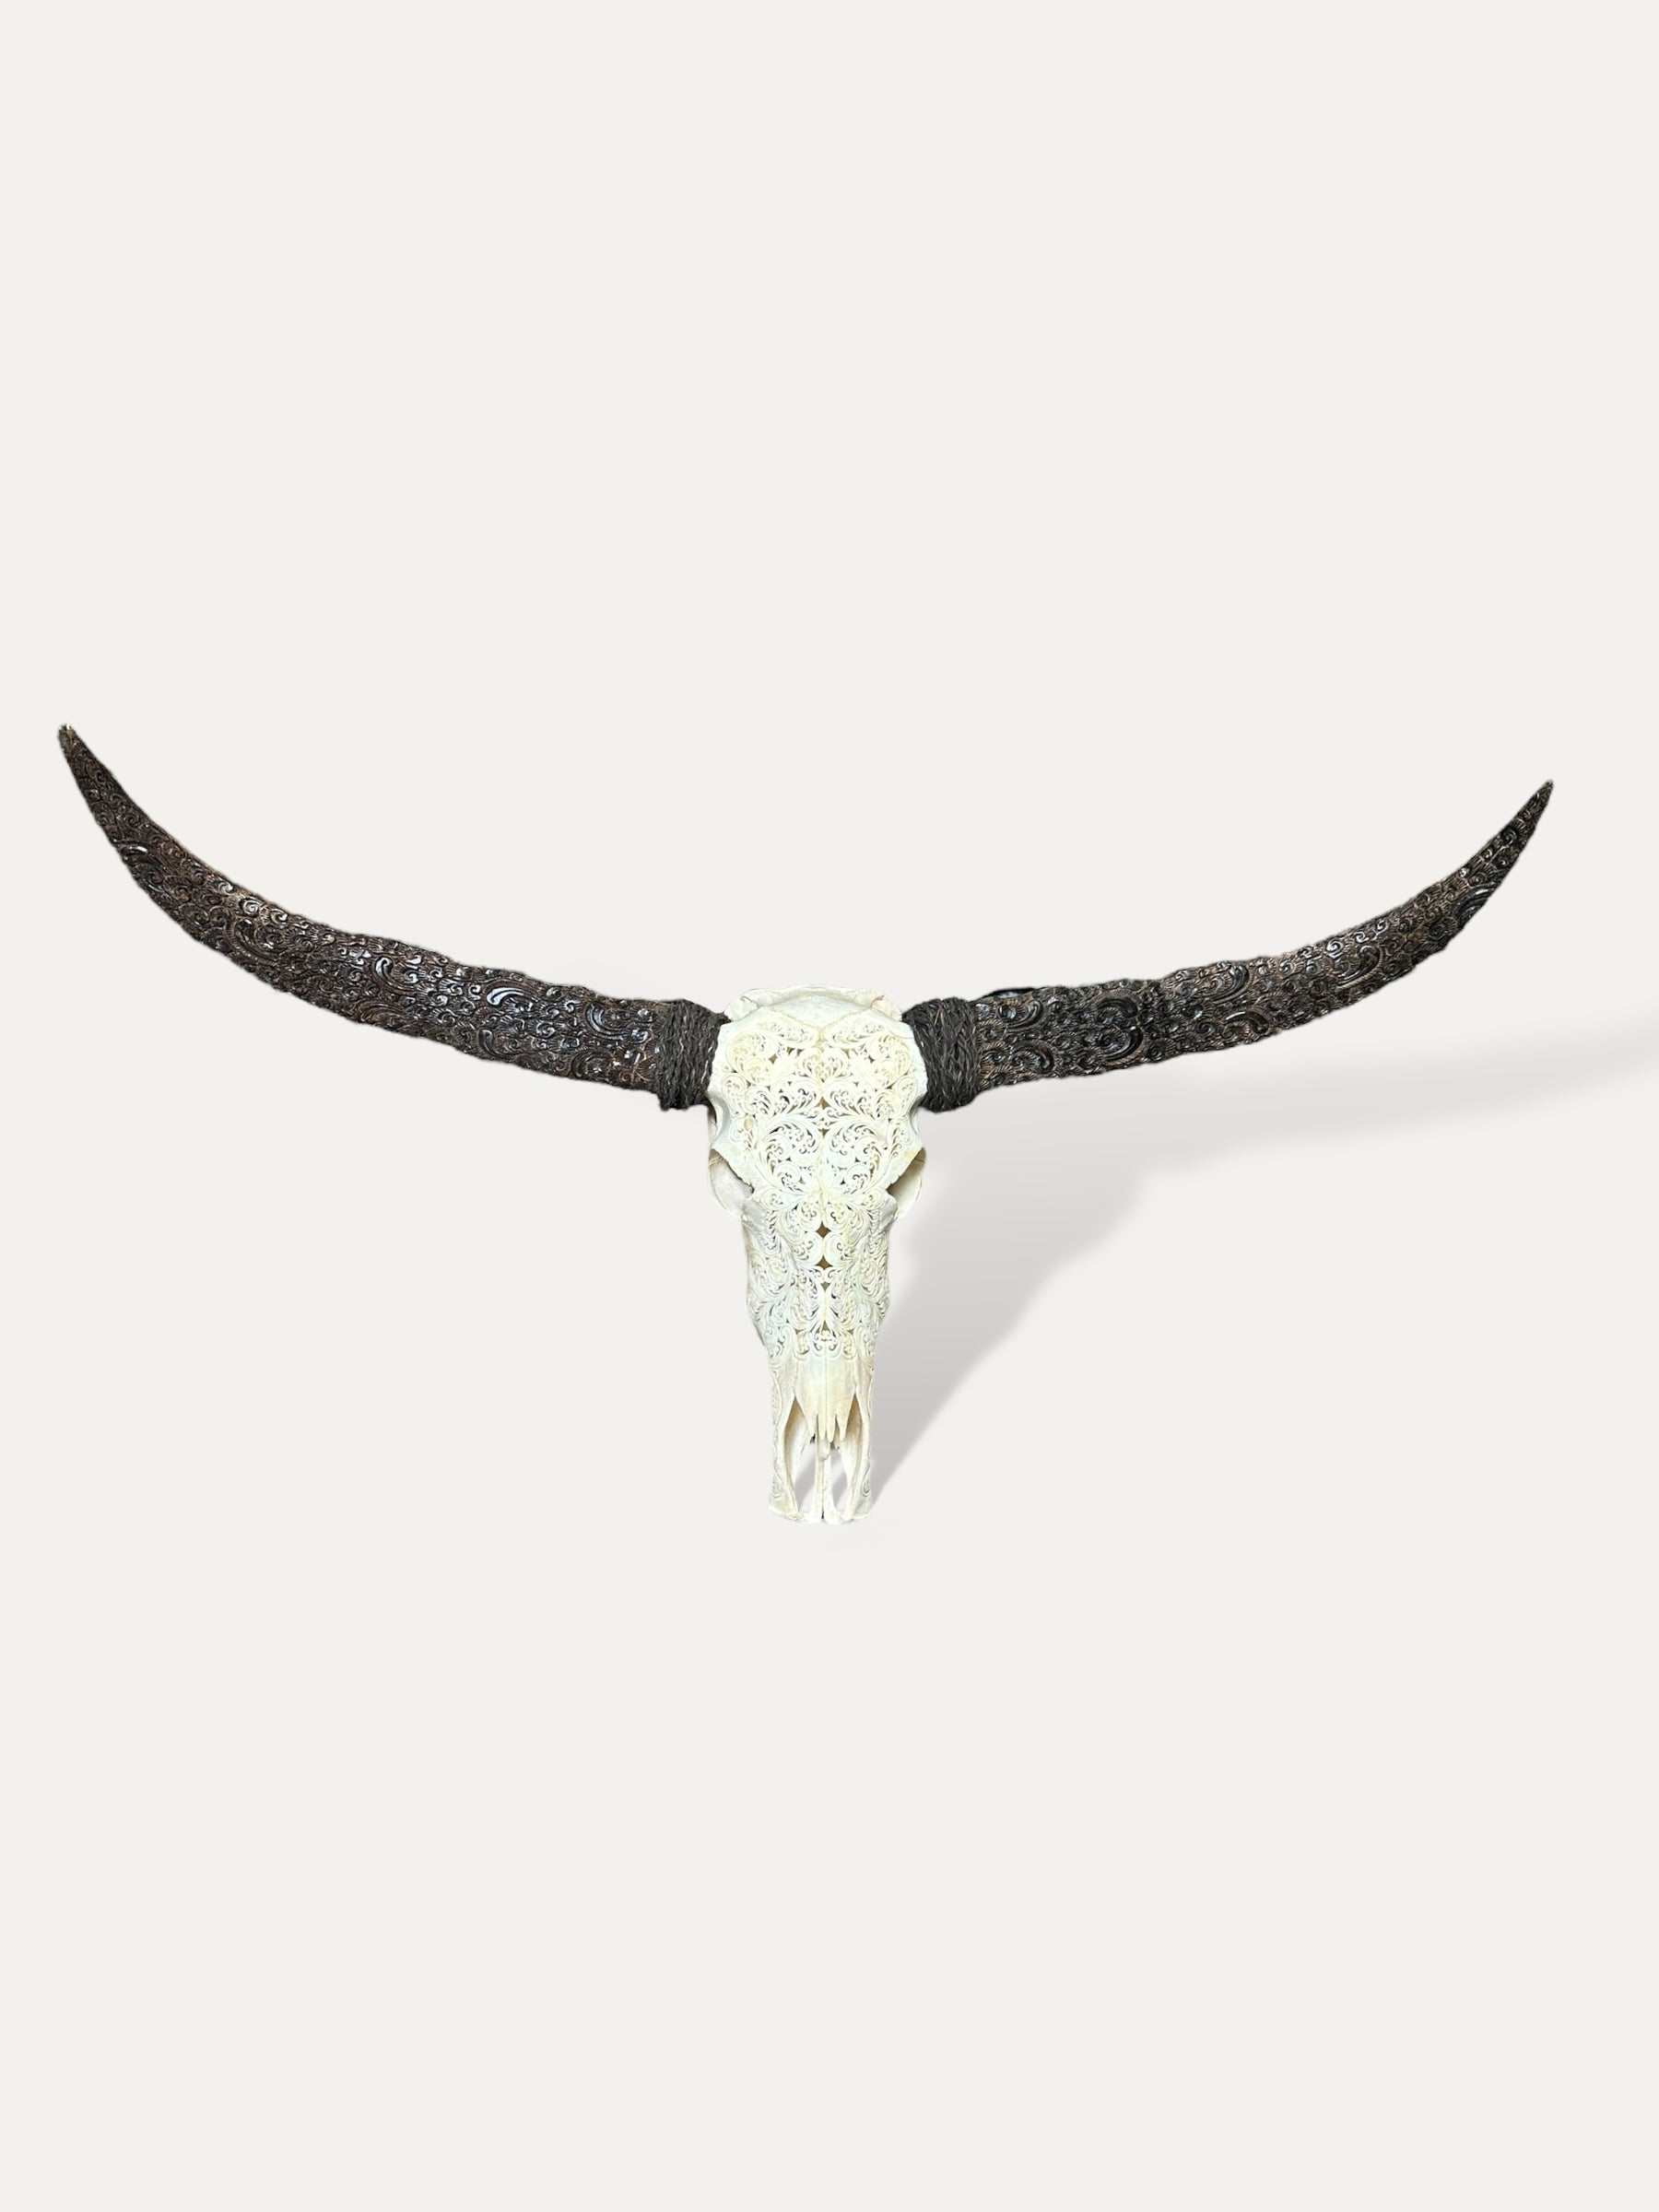 COKOHA Crâne de buffle sculpté XL - Lotus mystique